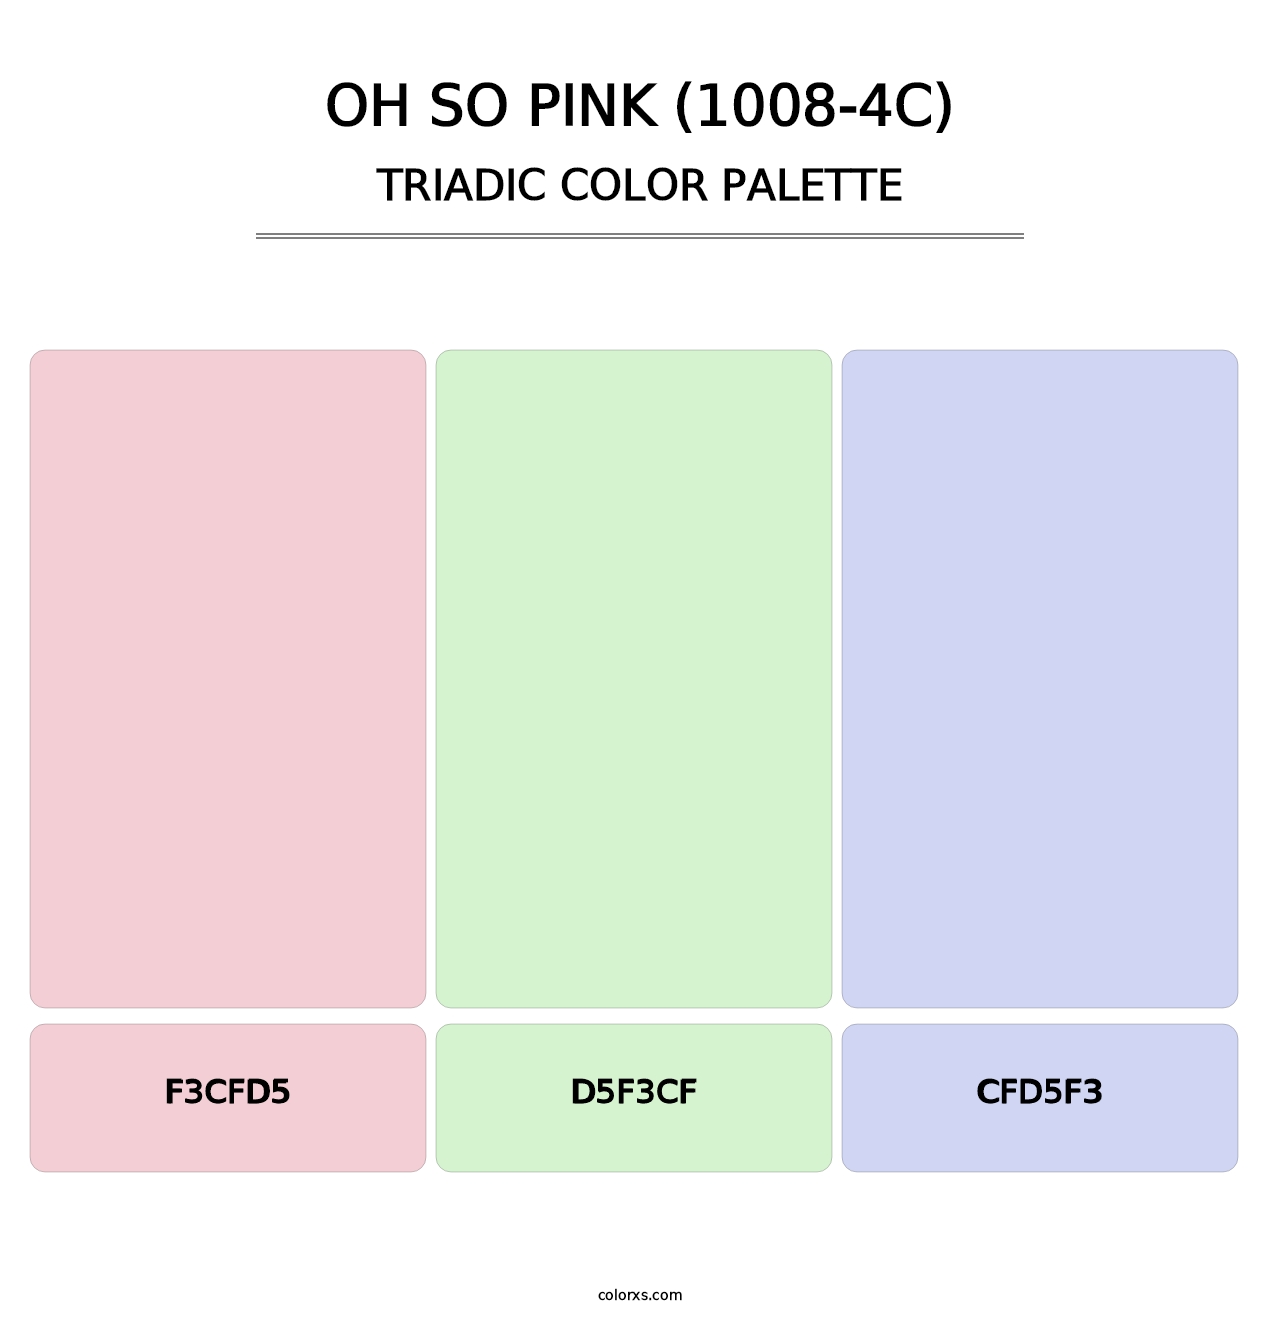 Oh So Pink (1008-4C) - Triadic Color Palette